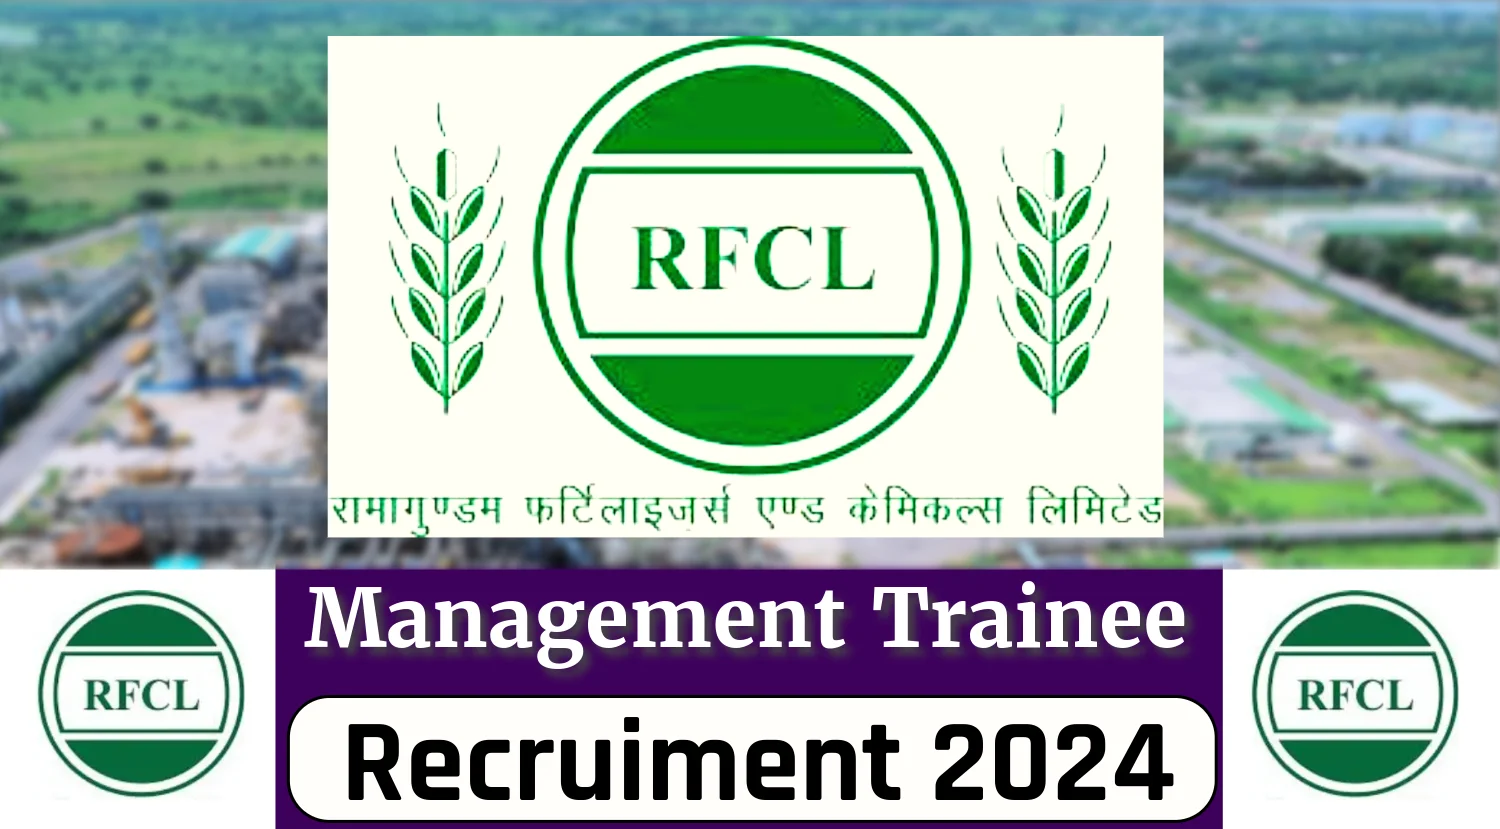 RFCL Management Trainee Recruitment 2024 Notification Out, Check Vacancy Details 